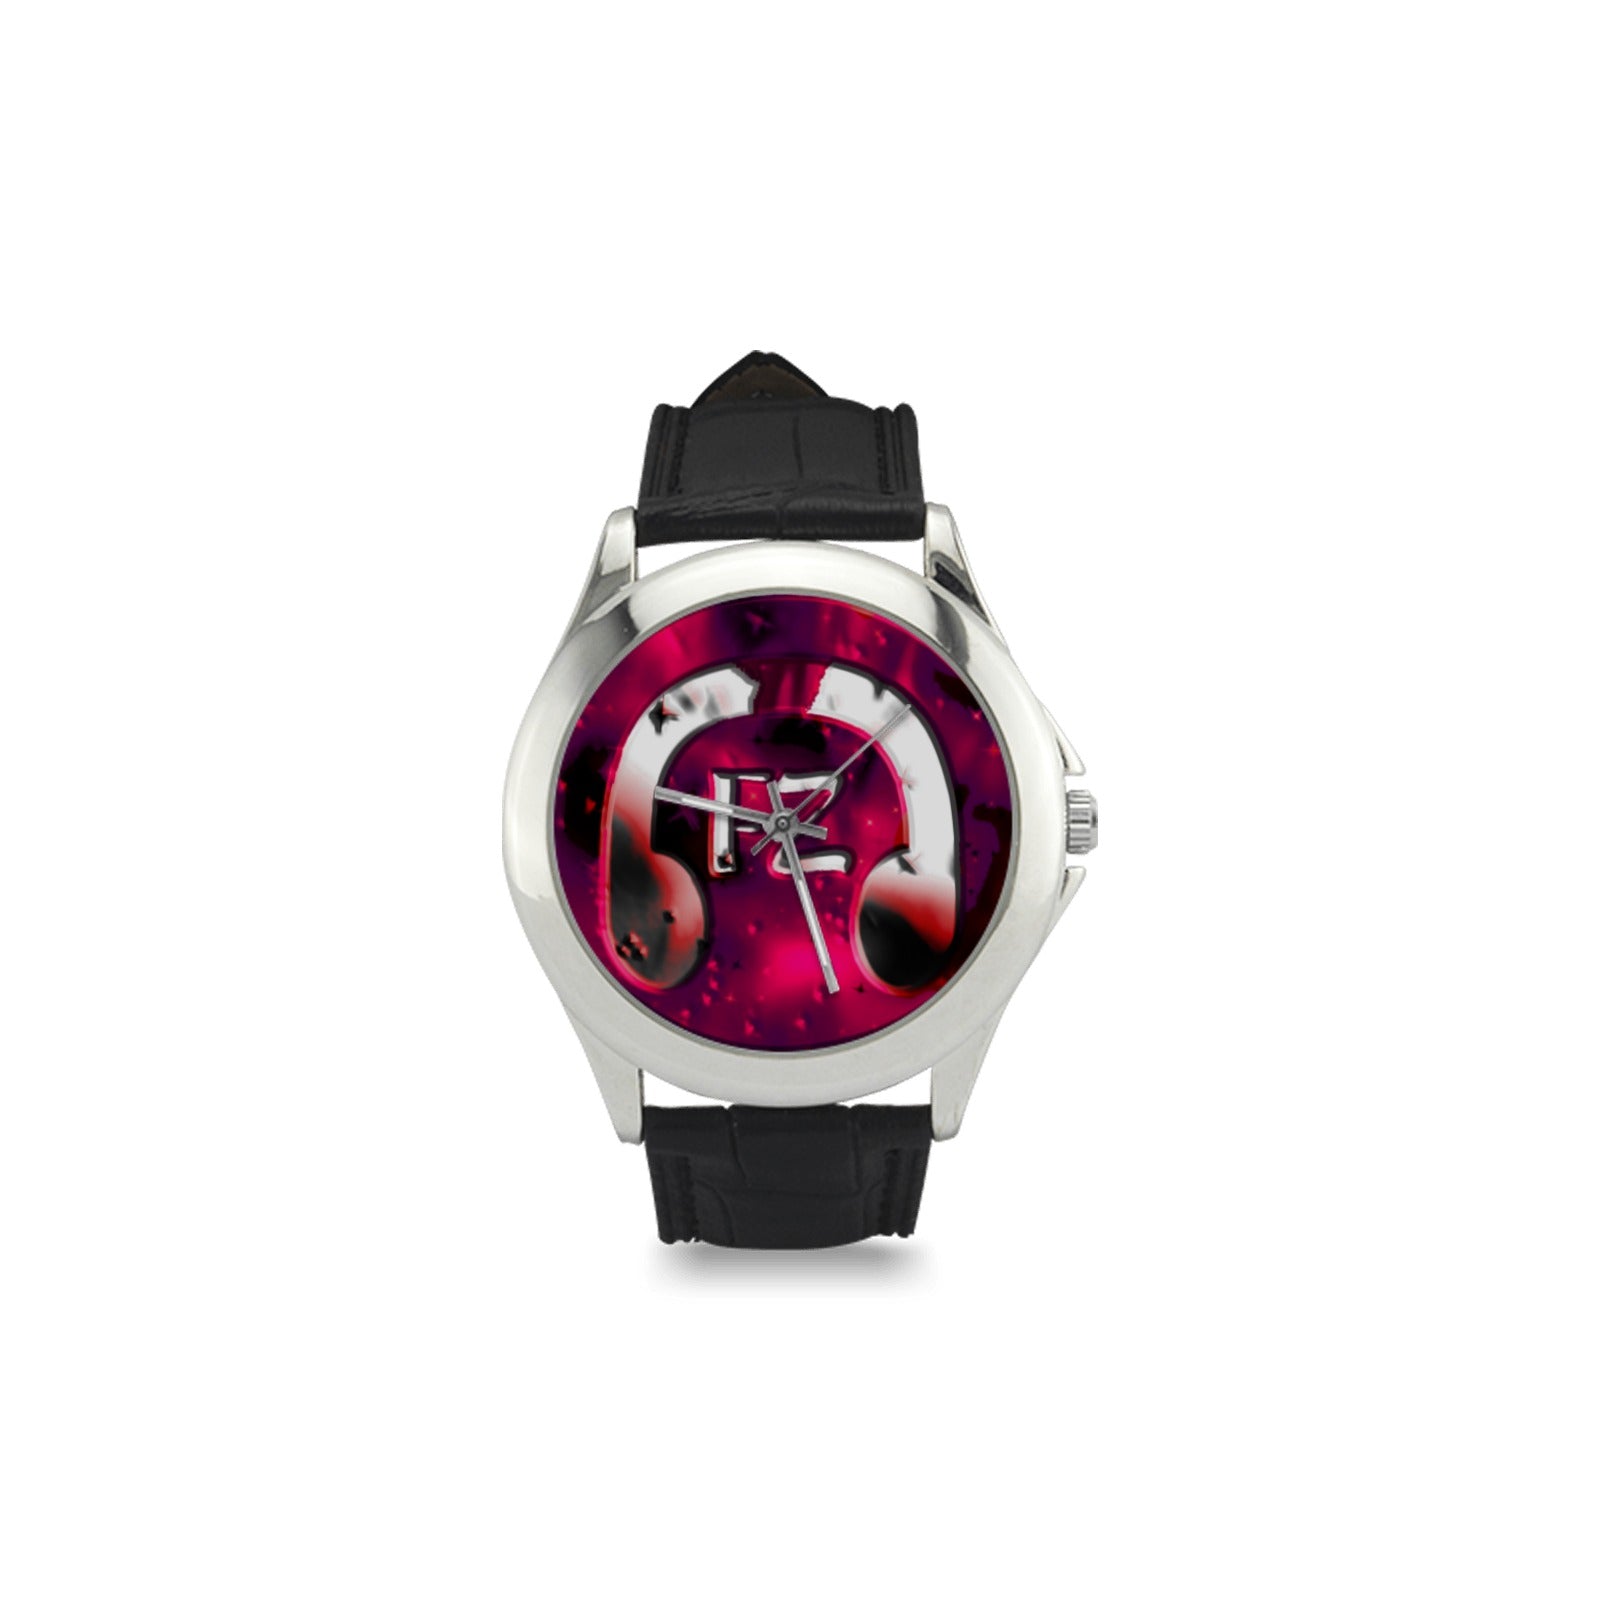 fz women's watch - red women's classic leather strap watch (model 203)